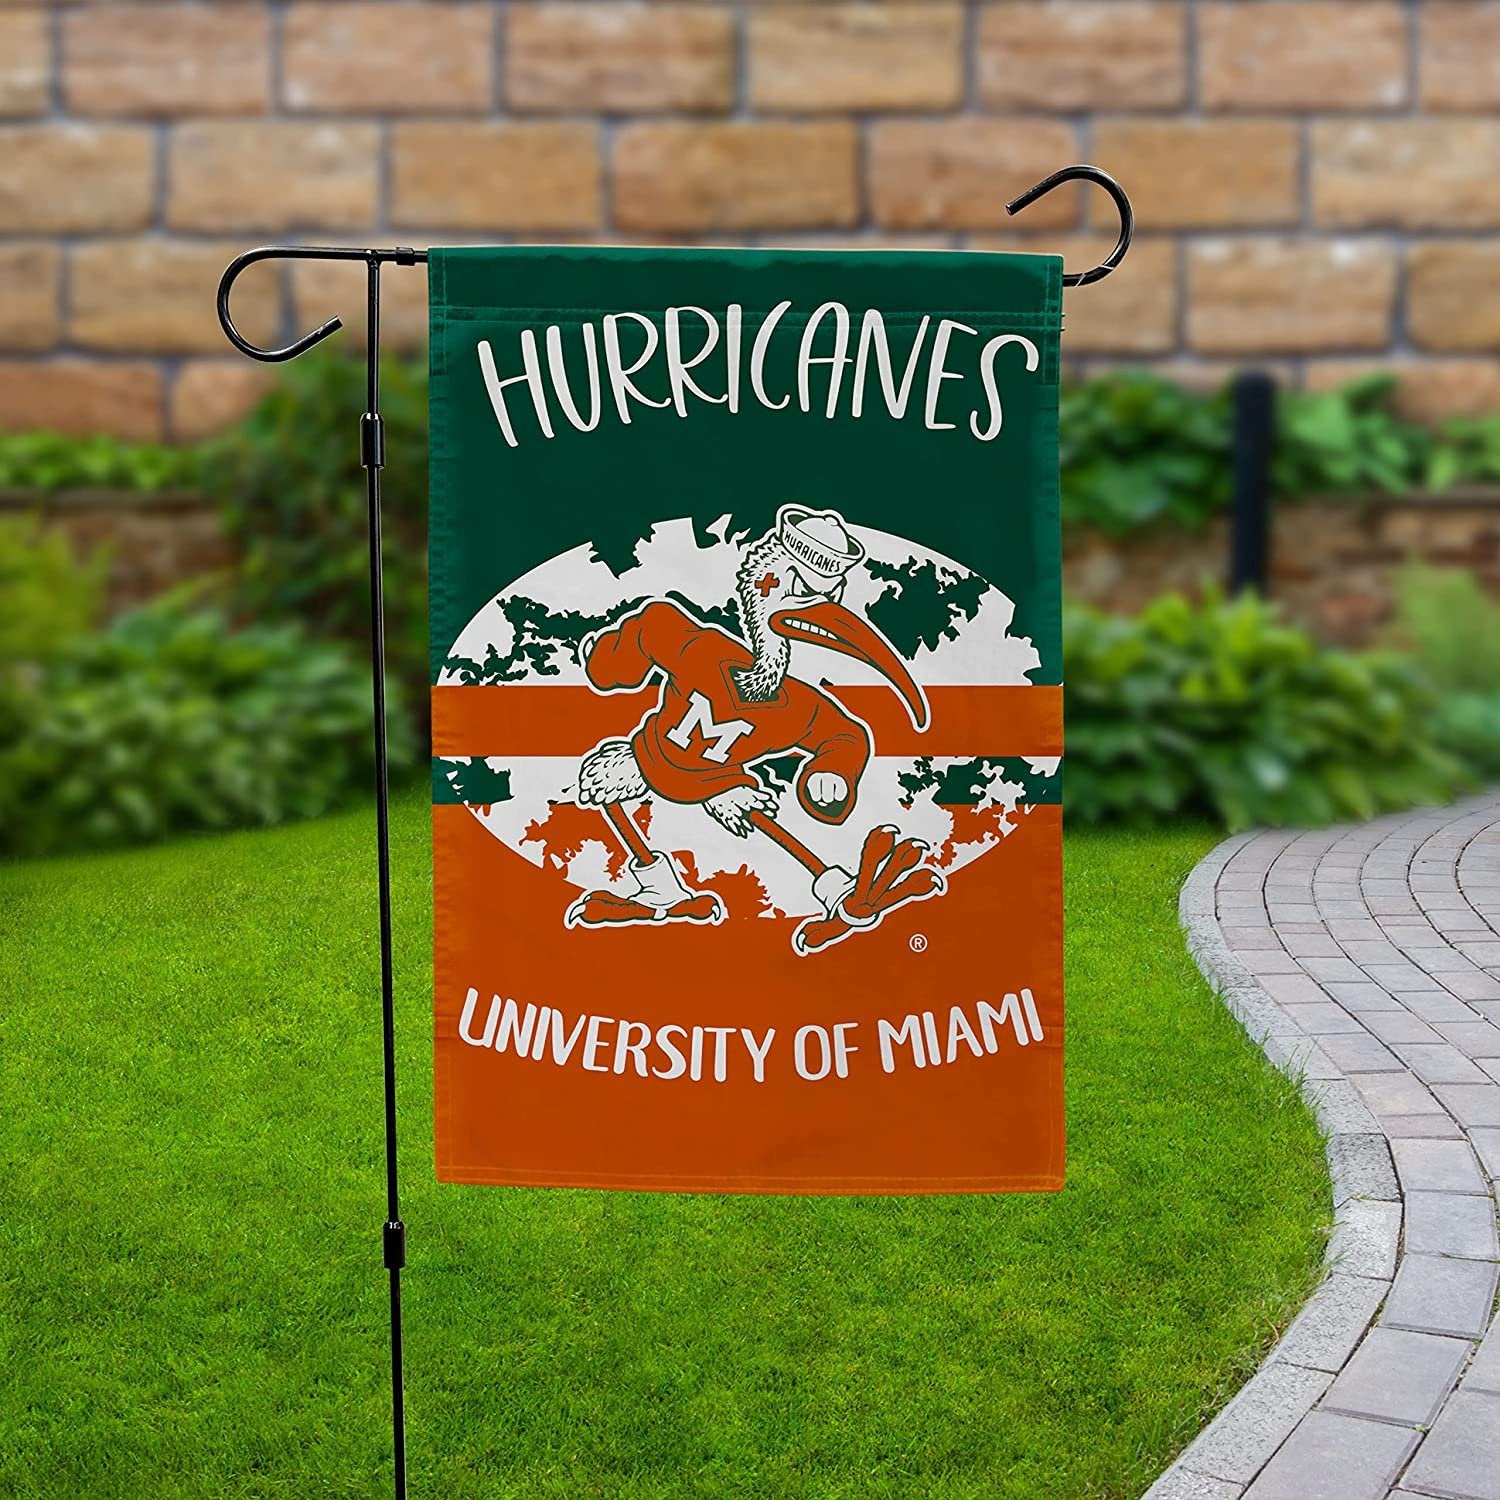 University of Miami Hurricanes Double Sided Garden Flag Banner 12x18 Inch Alternate Design